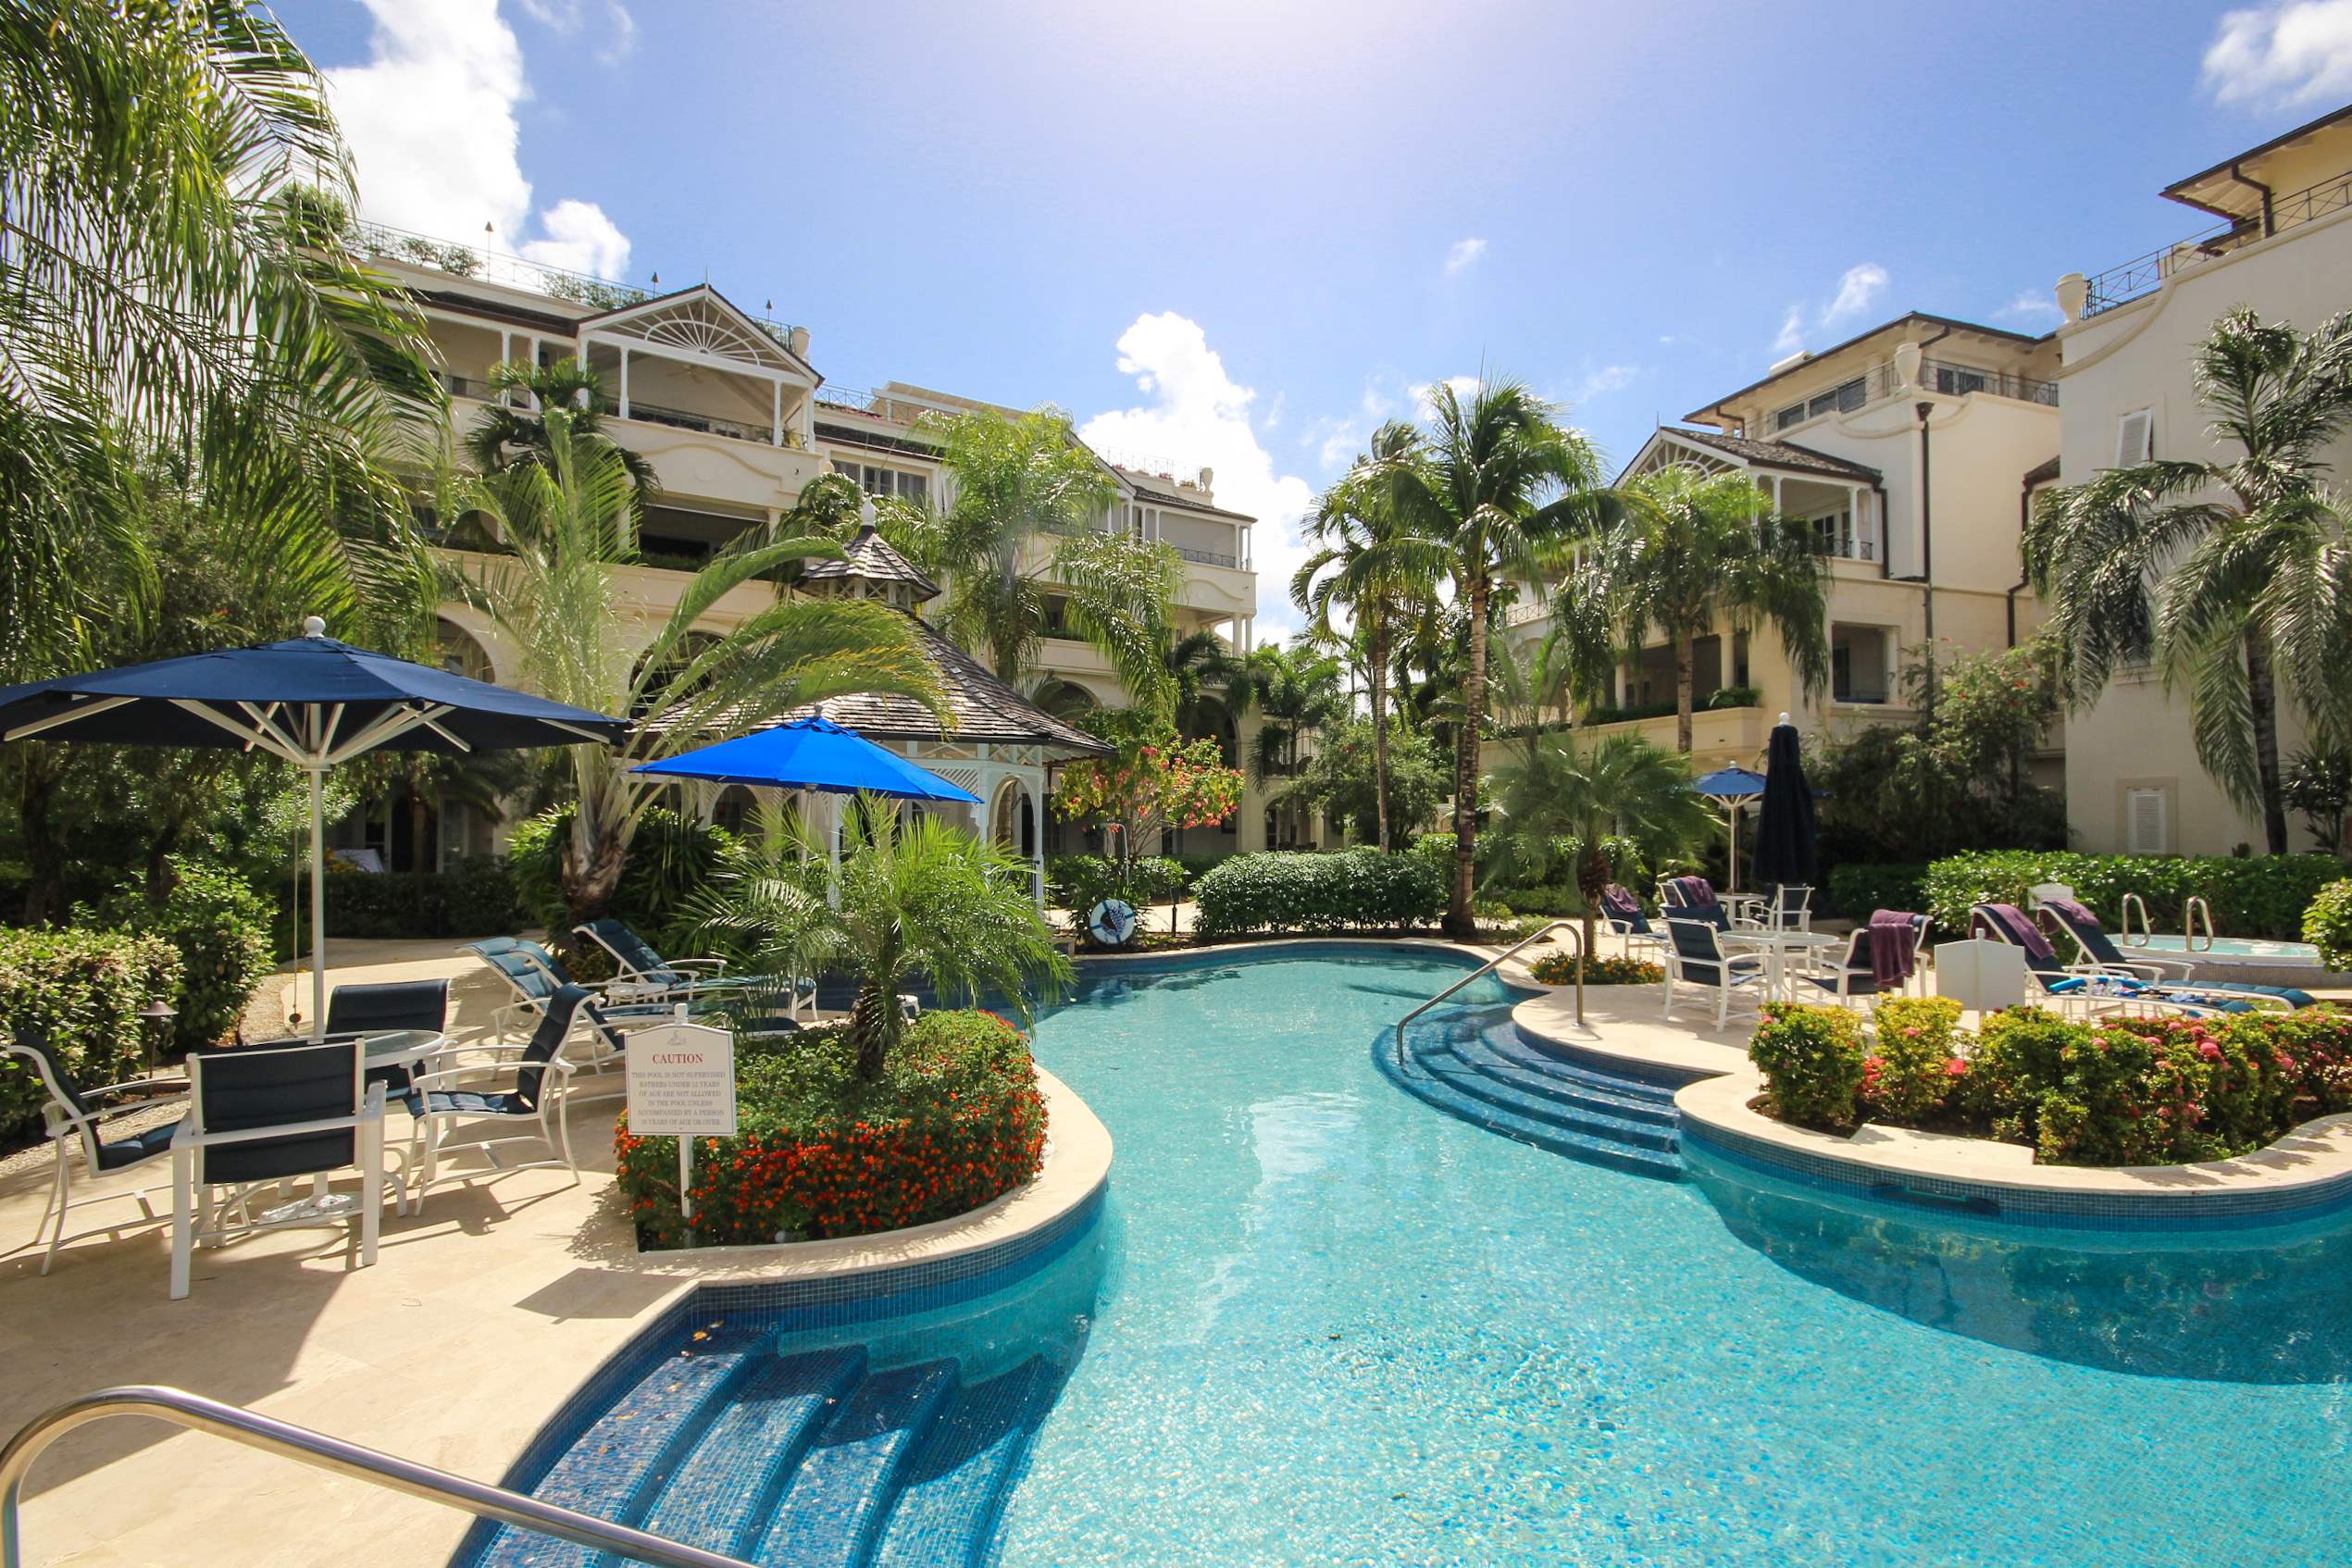 Schooner Bay 205, One Bedroom rate, 1 bedroom apartment in St. James & West Coast, Barbados Photo #11